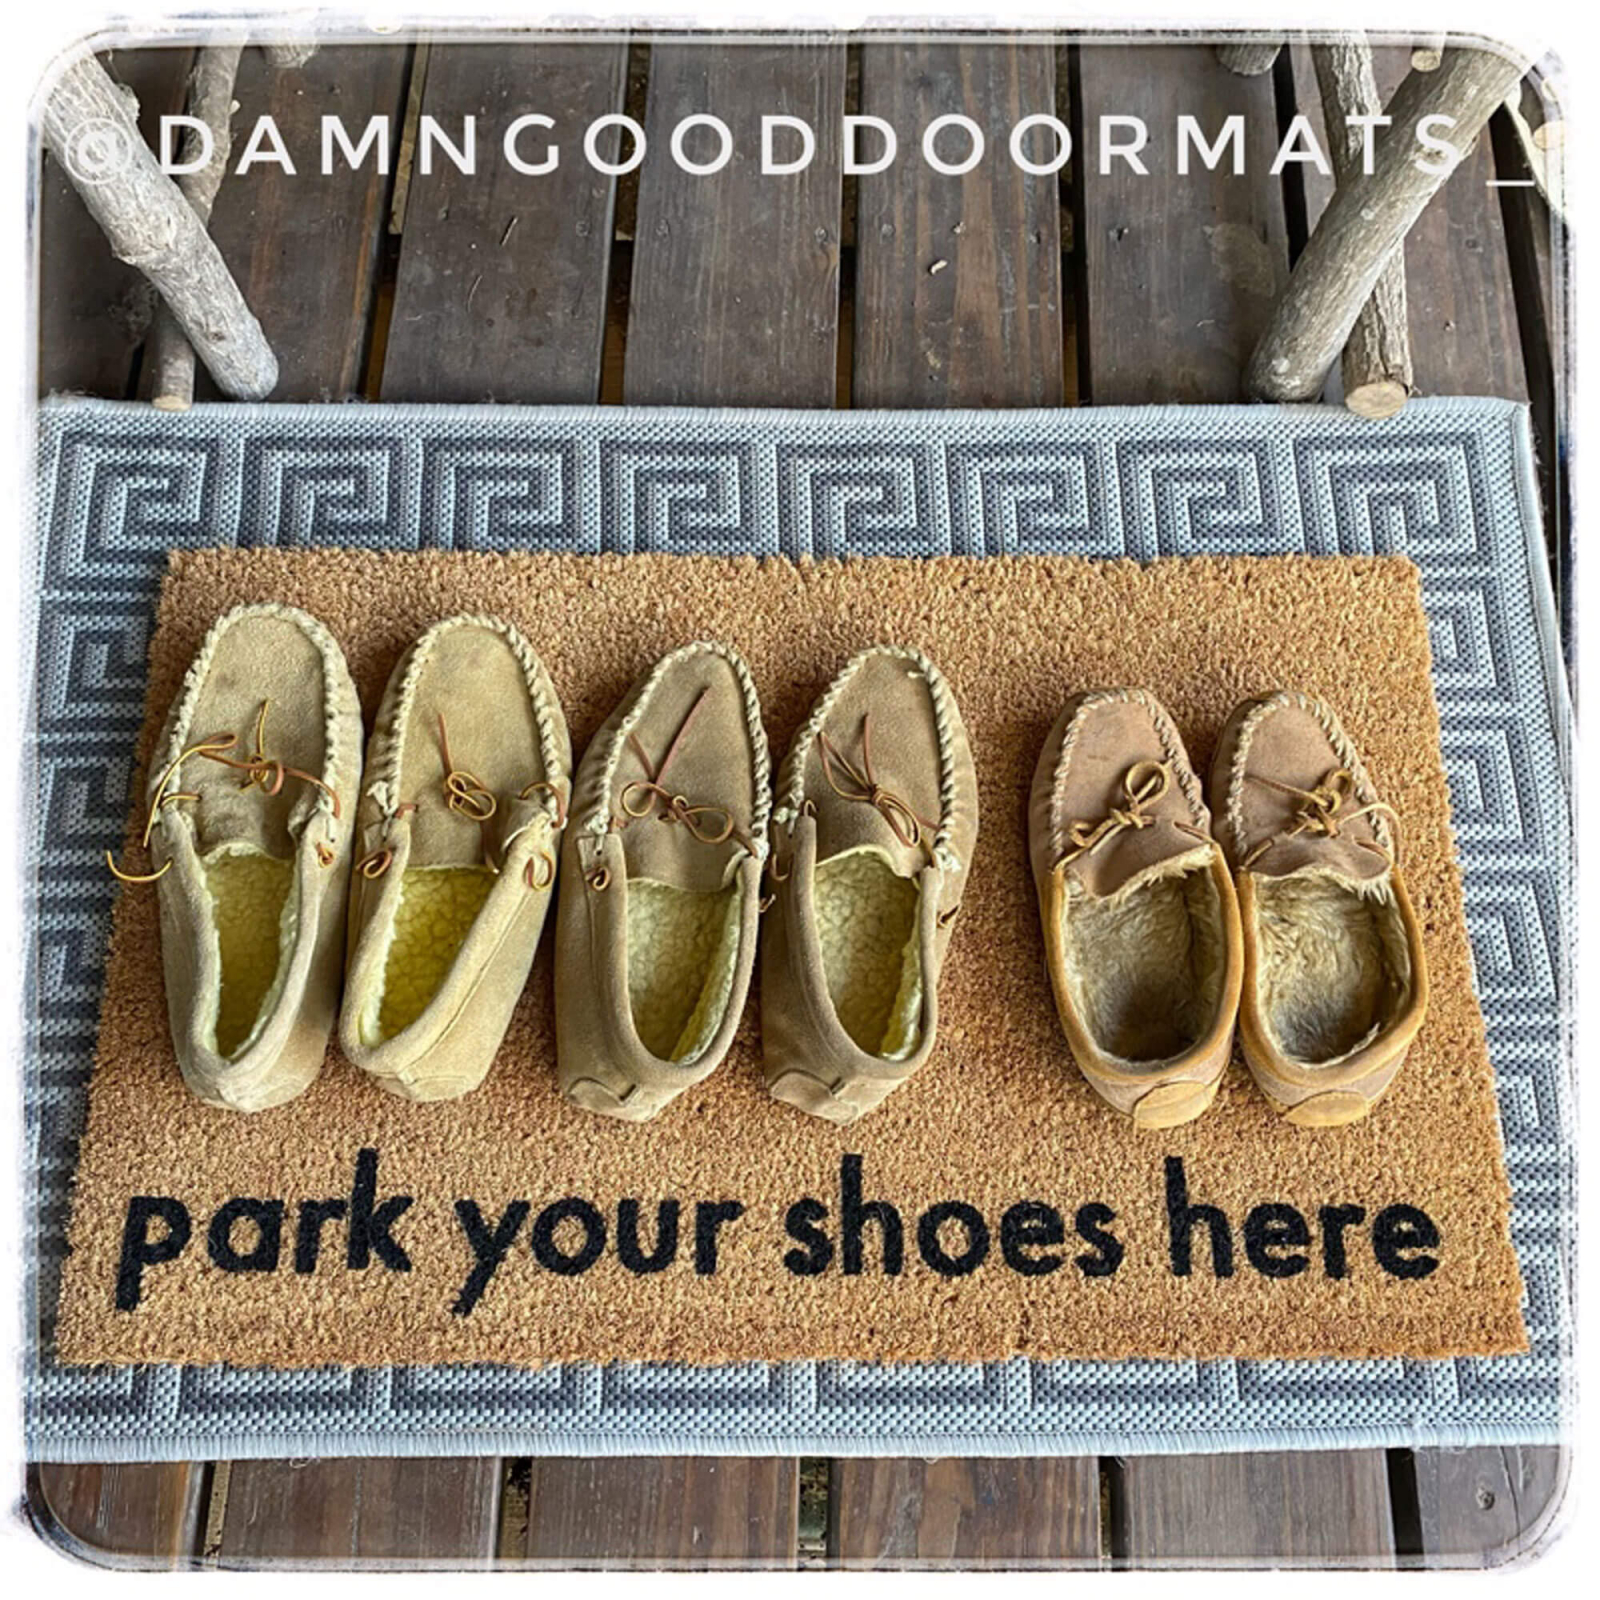 https://www.damngooddoormats.com/sites/damngooddoormats.indiemade.com/files/imagecache/im_clientsite_product_zoom/park-your-shoes-here-lifestyle-shoes-off-damn-good-dootmats.jpg